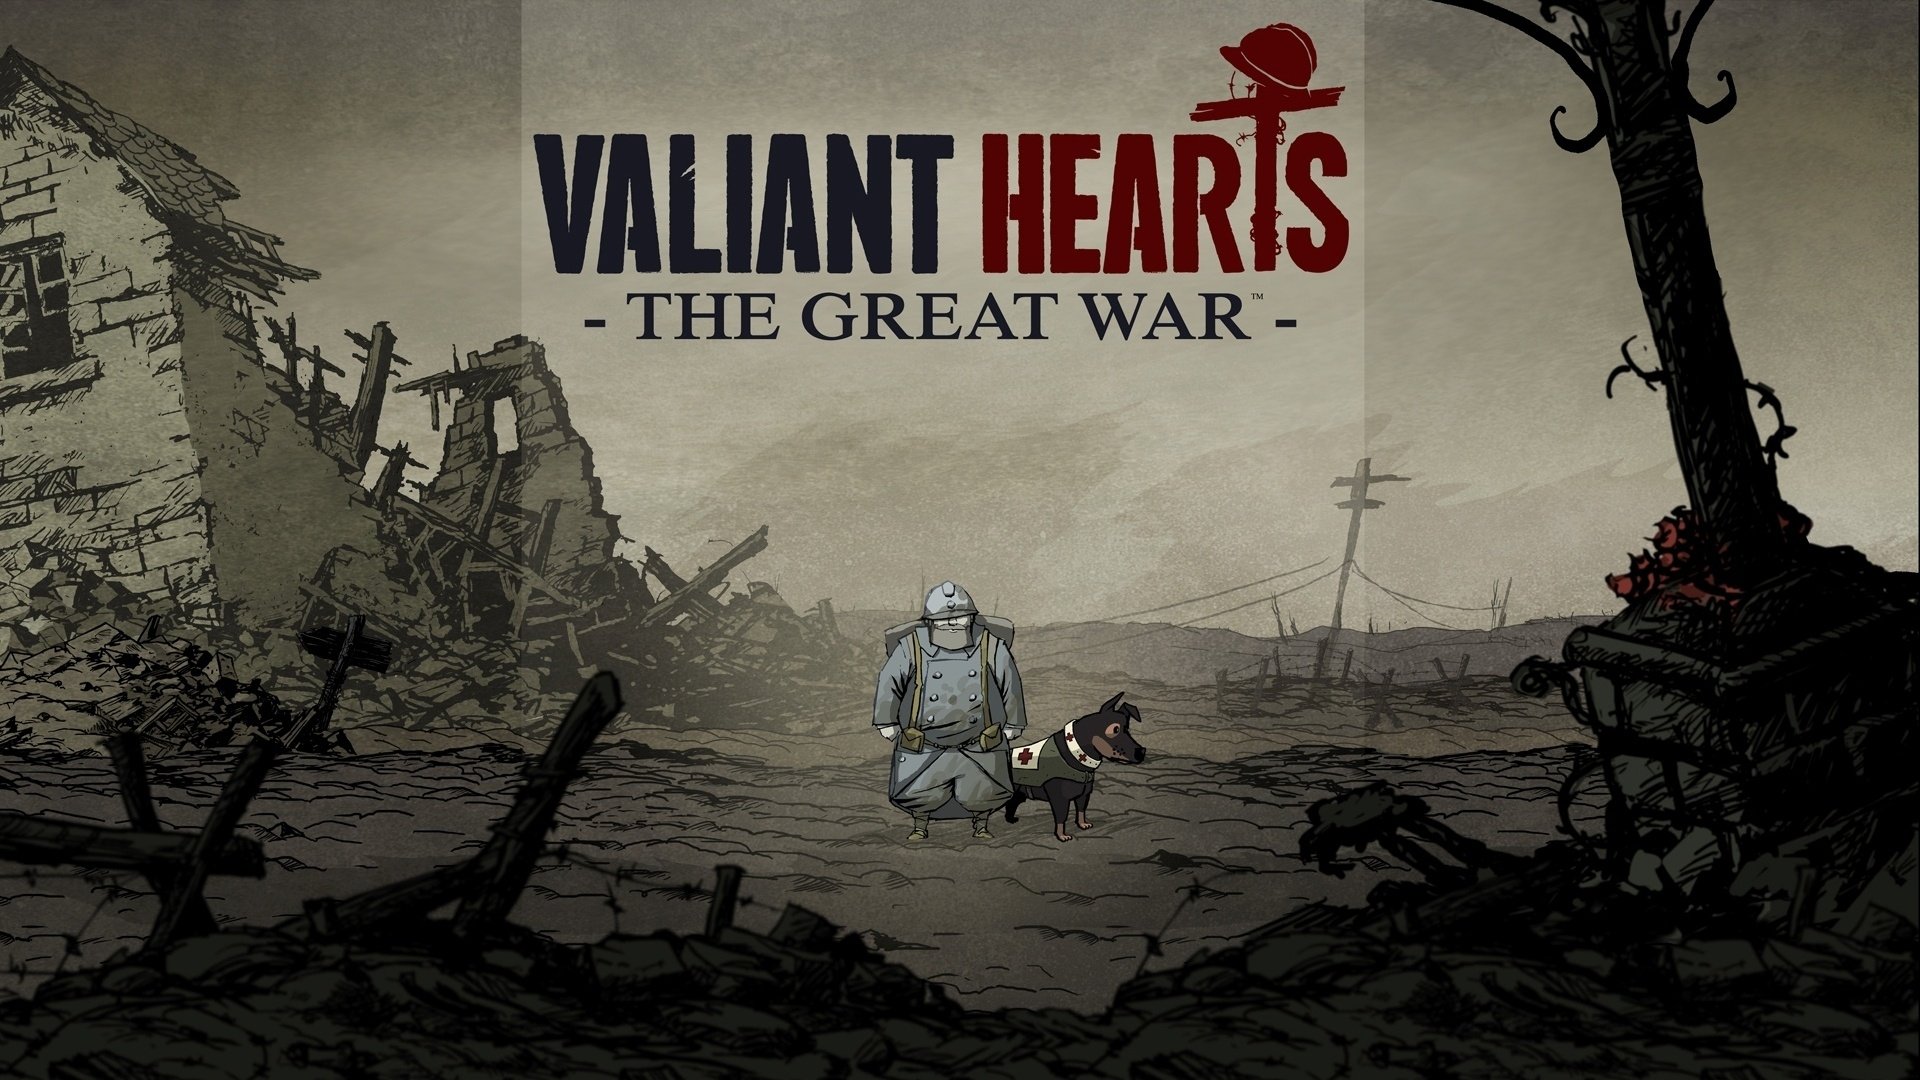 10+ Valiant Hearts: The Great War Fonds d'écran HD et Images